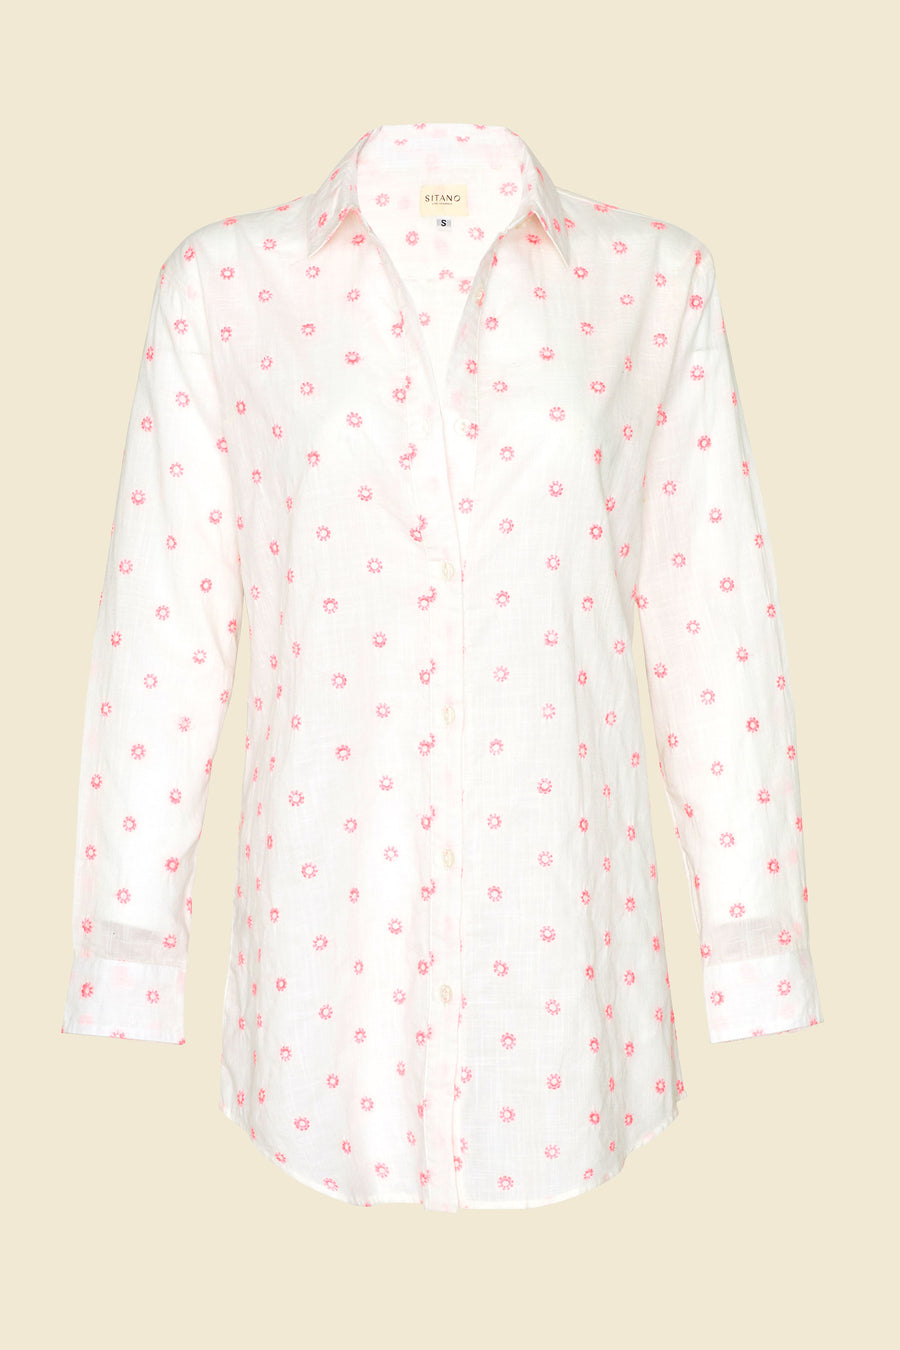 Primavera Shirt Dress - White with Pink Flowers